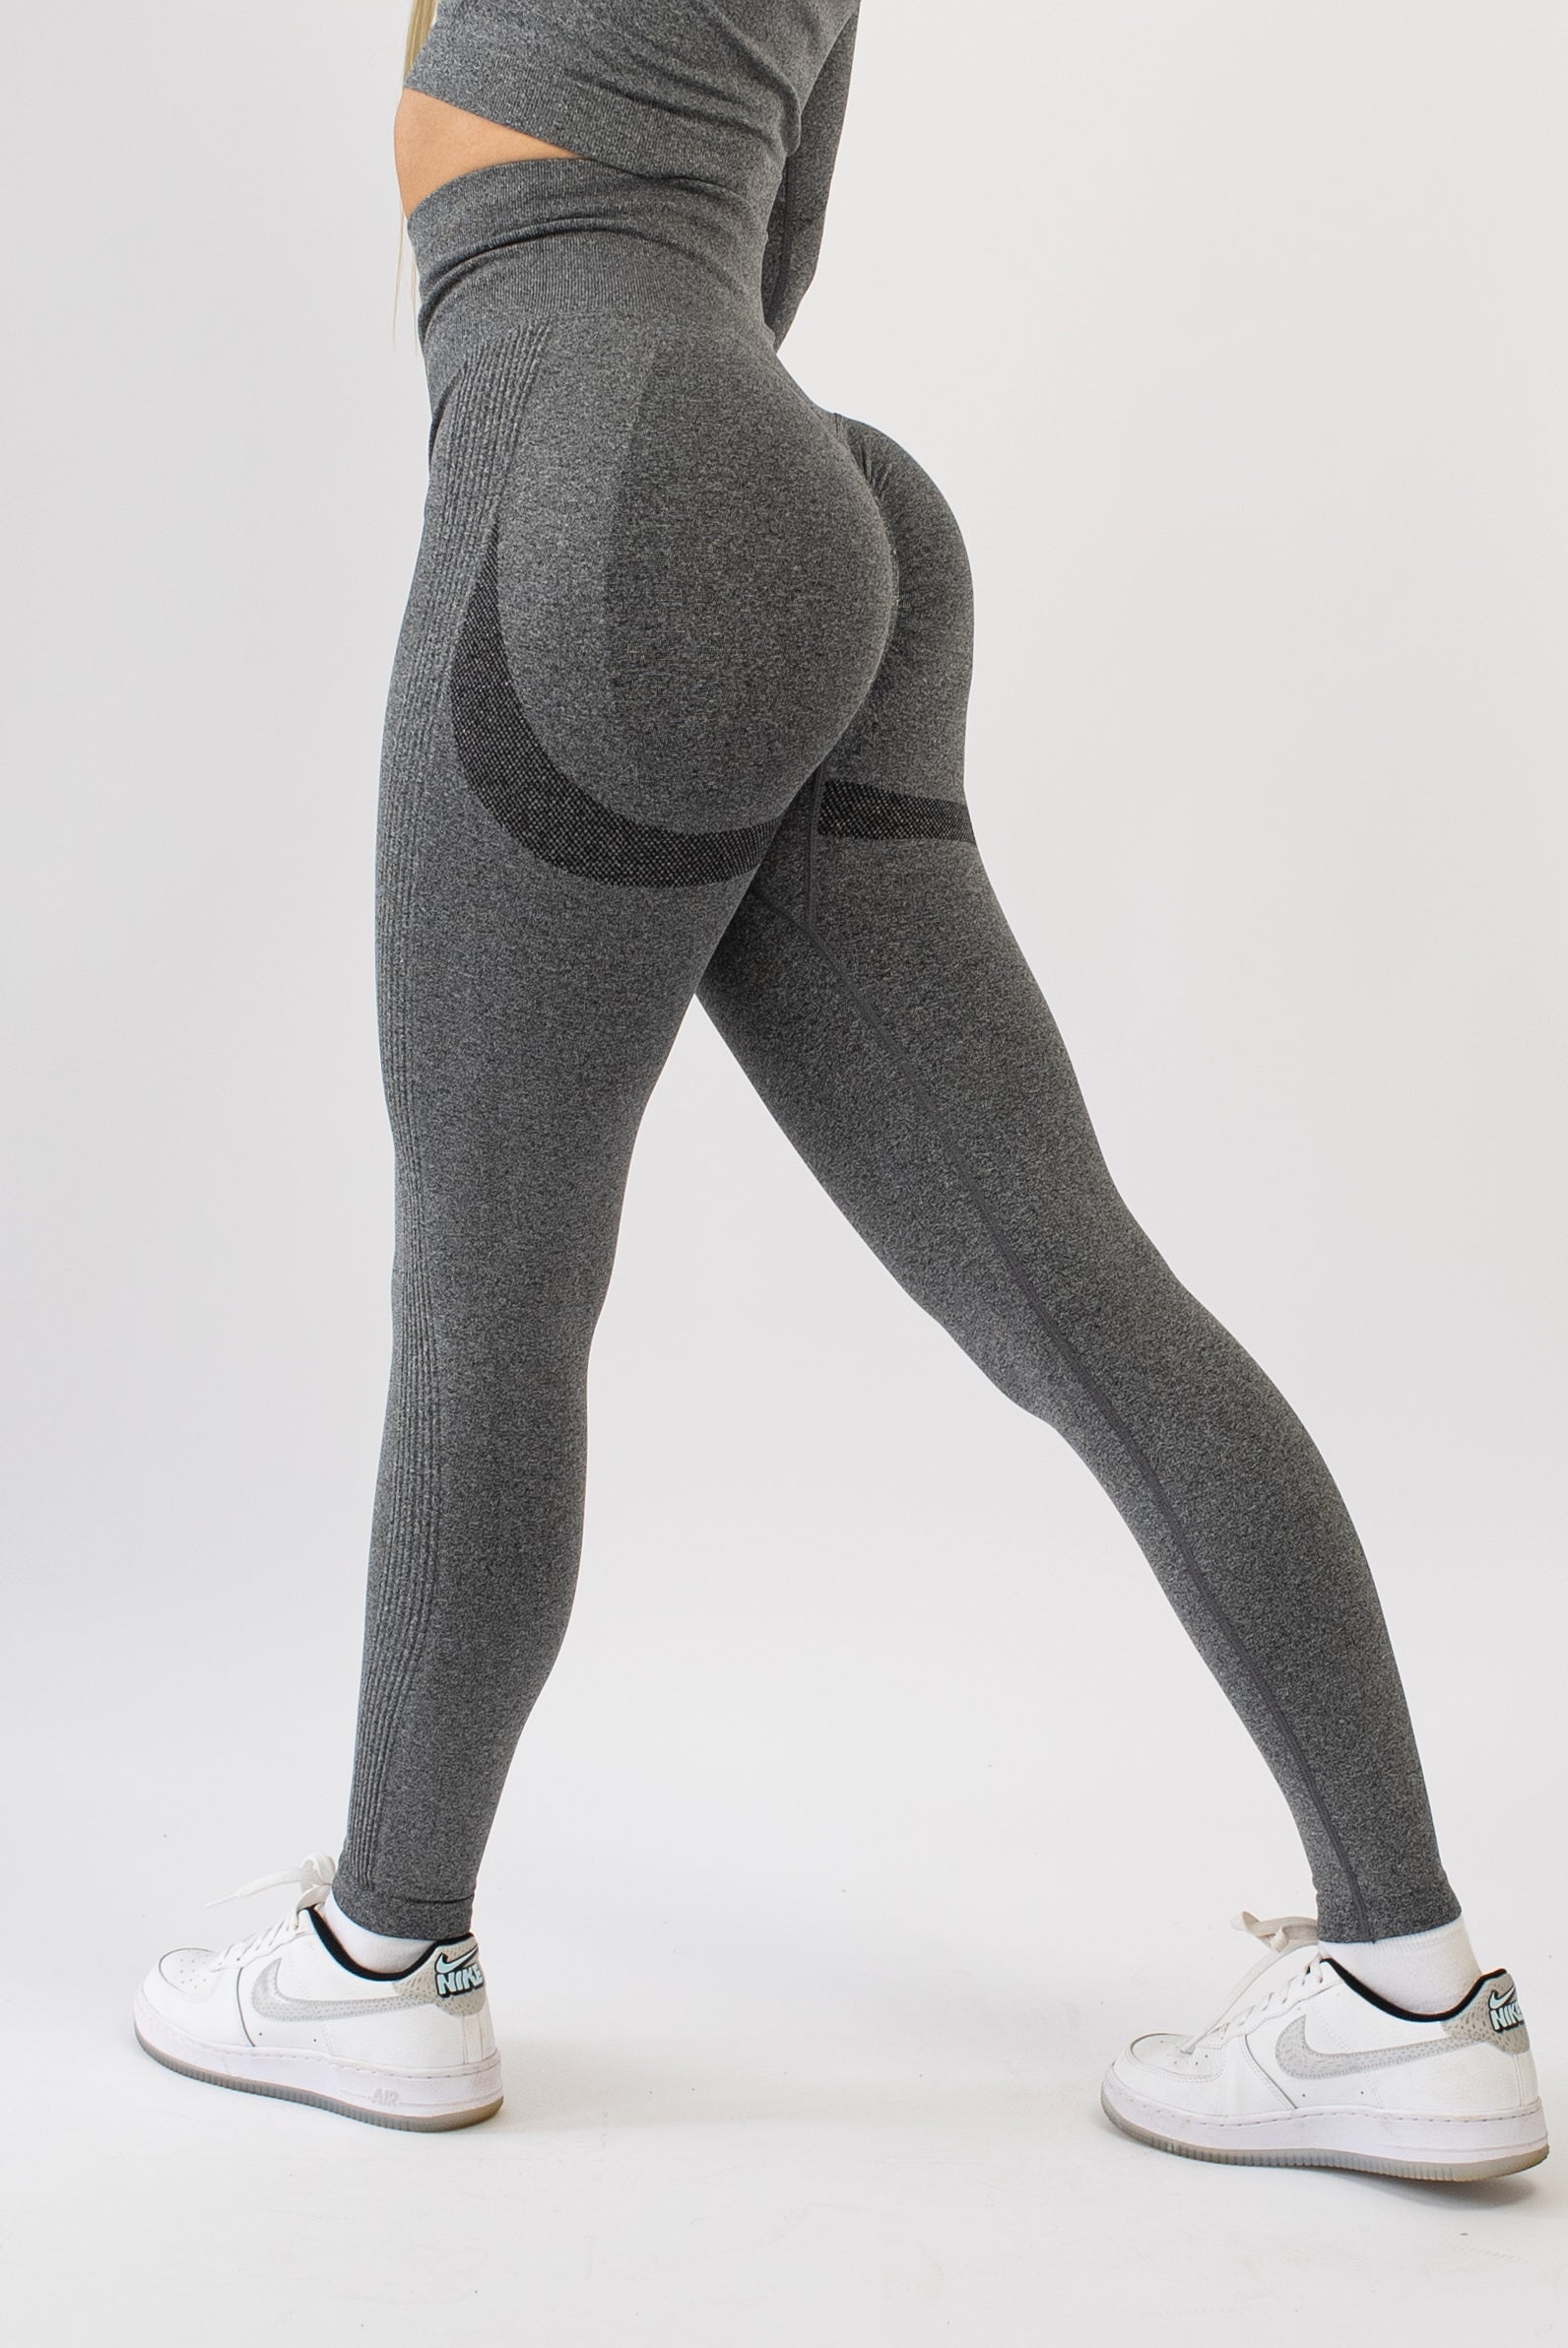 Scrunch Bum Leggings - Charcoal, Gym Clothing